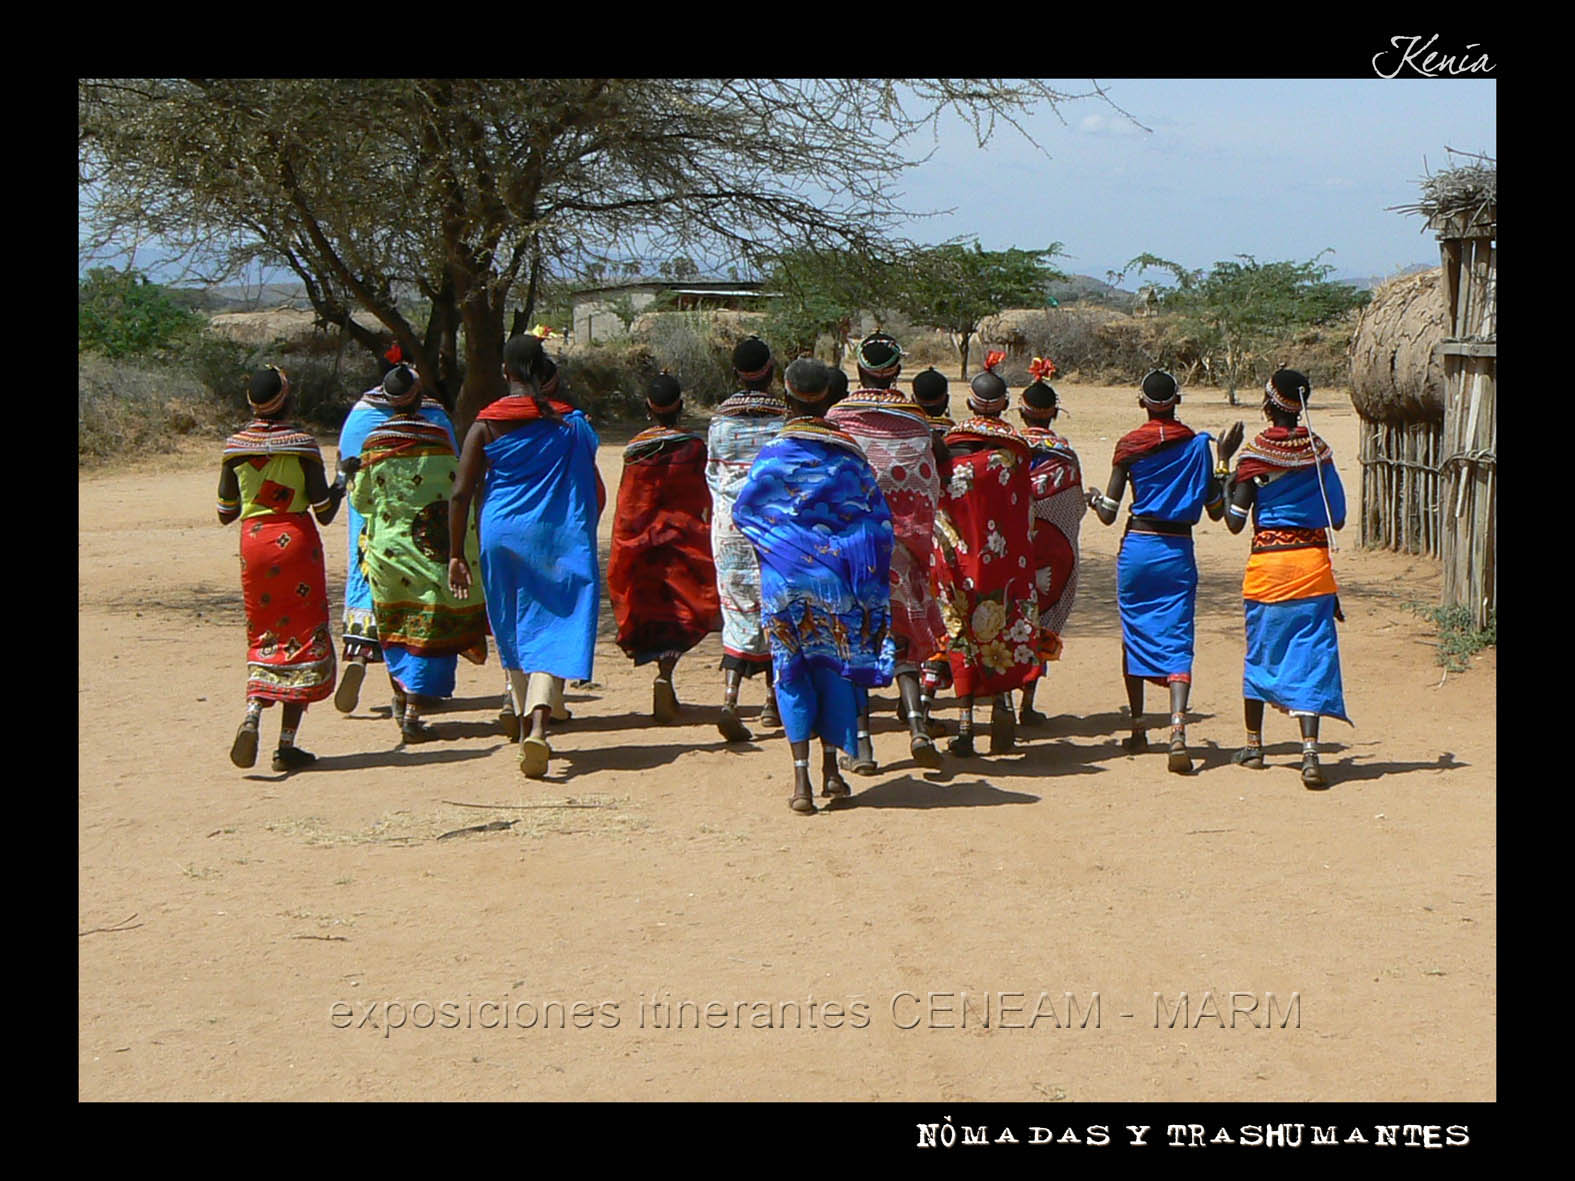 Grupo de mujeres con vestidos coloridos en Kenia